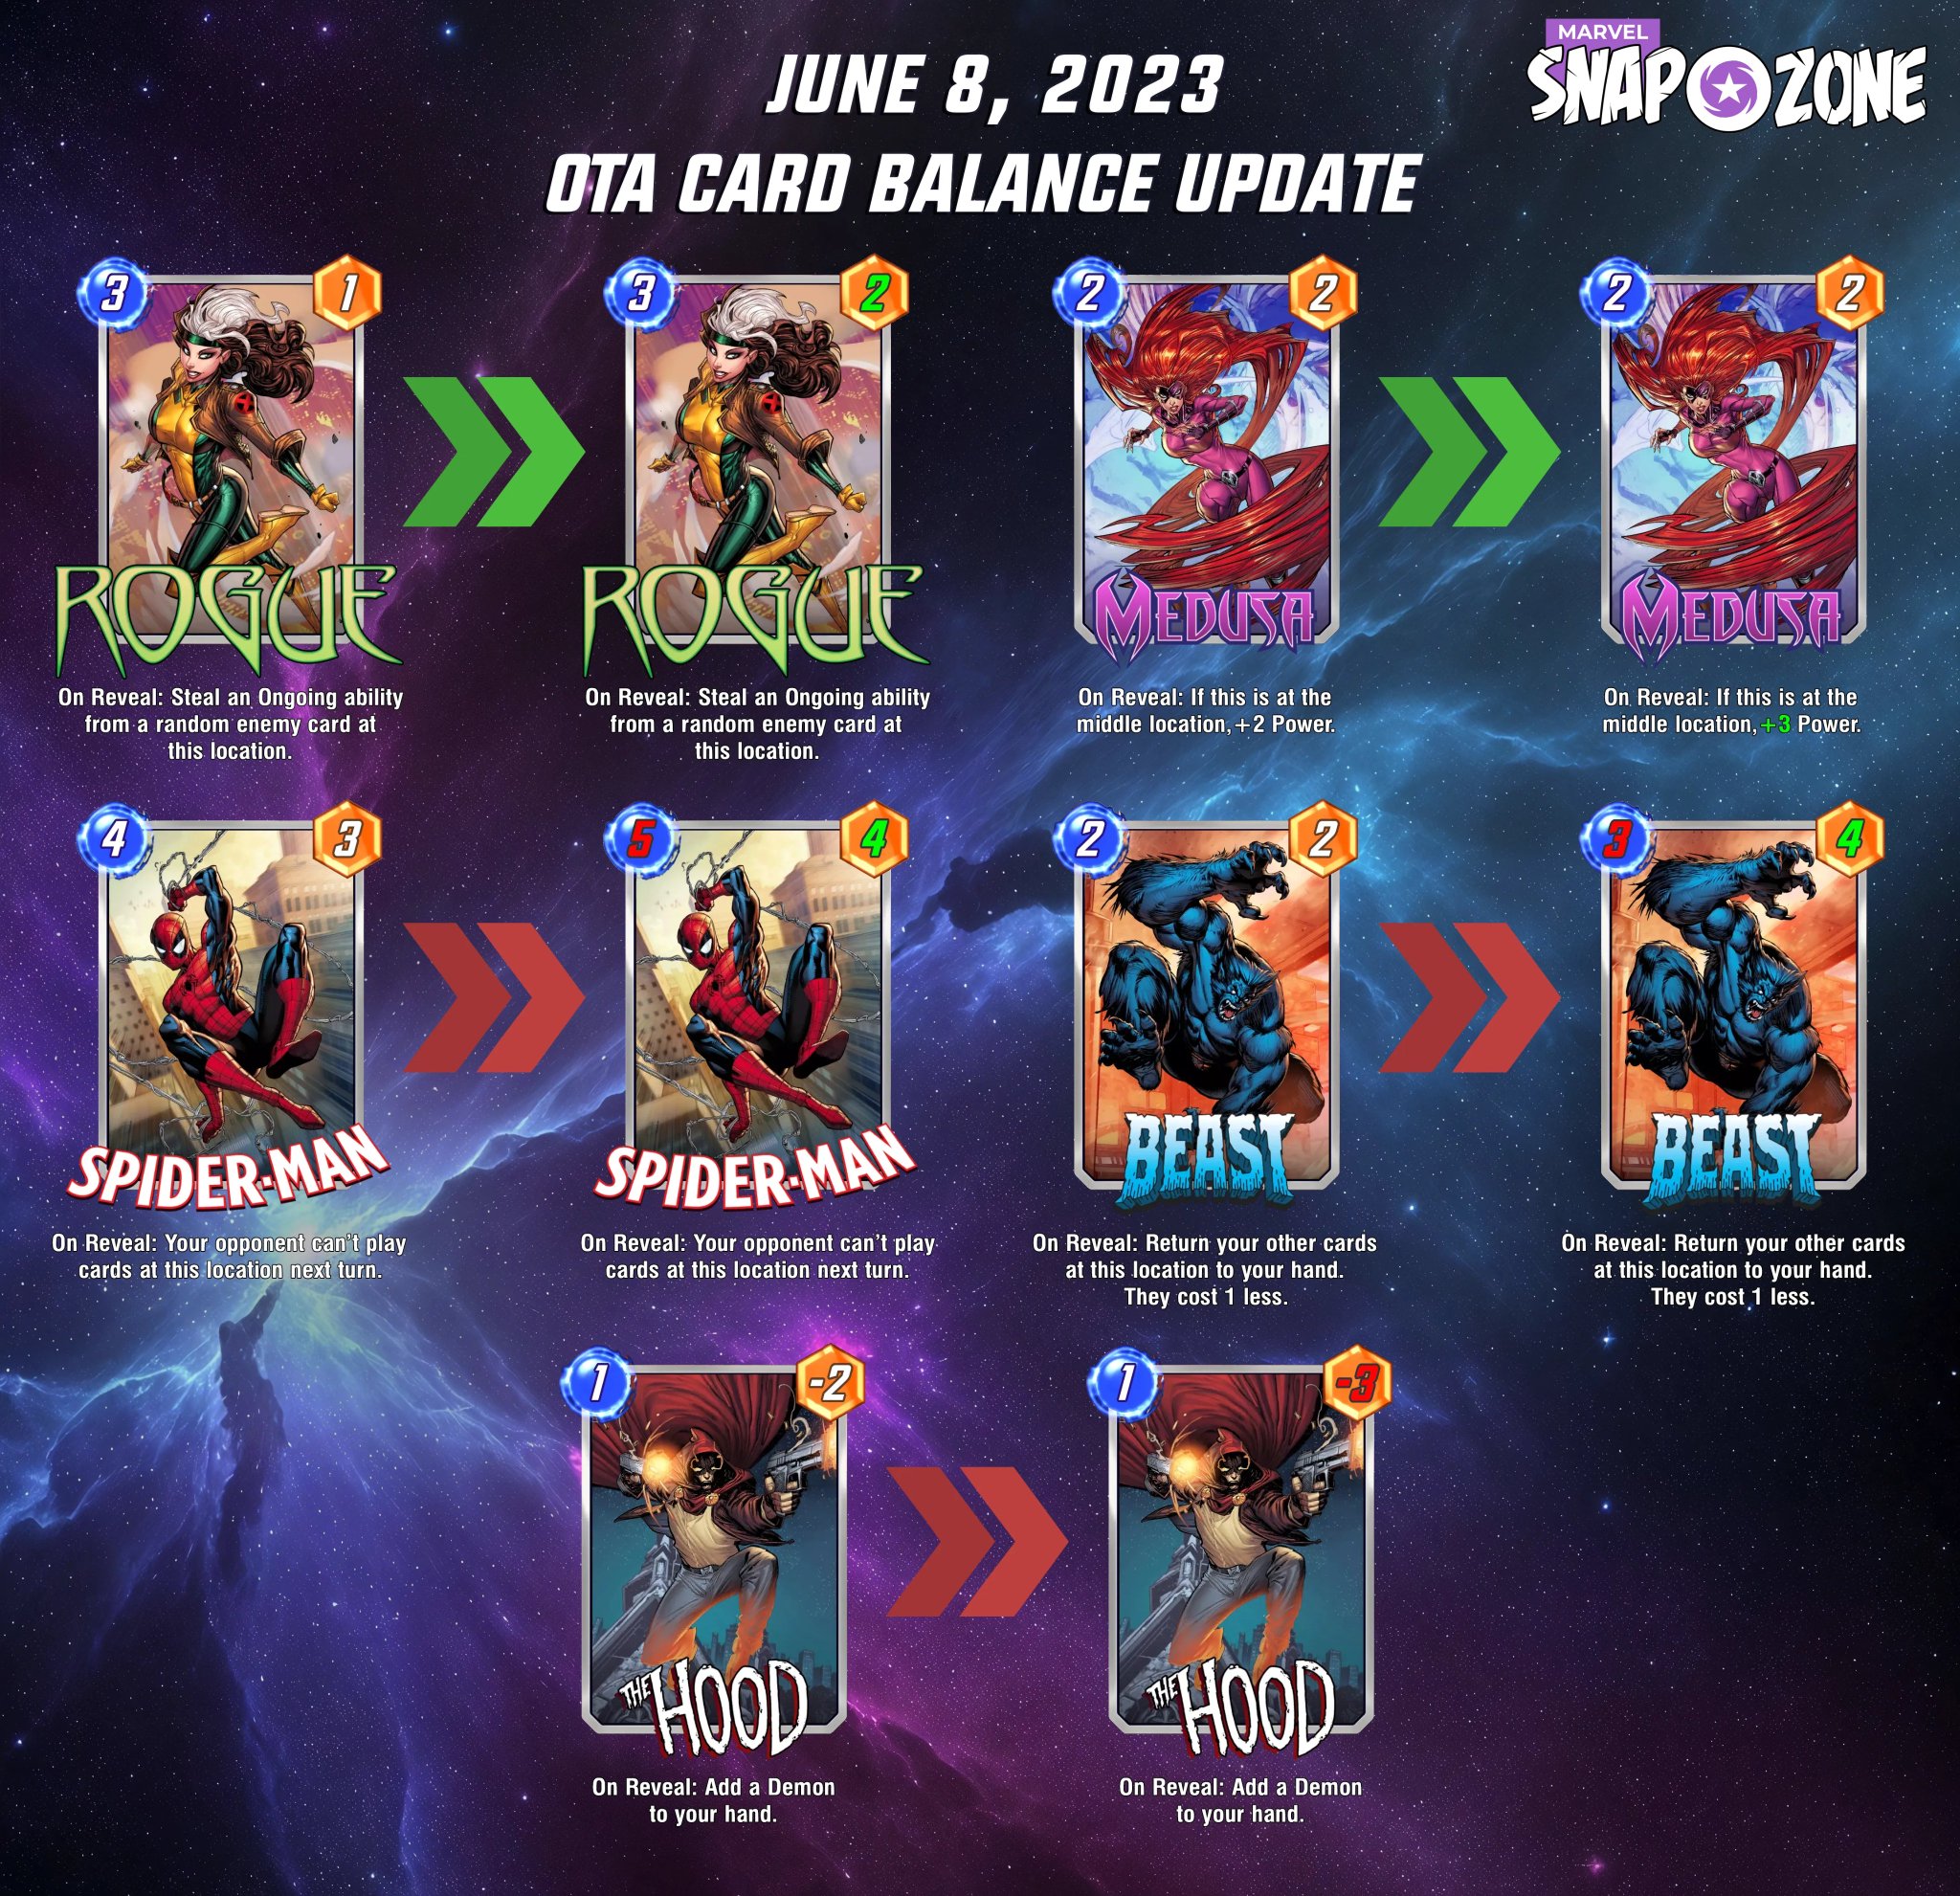 Marvel Snap Zone on X: 📊Marvel Snap OTA Balance Update Analysis